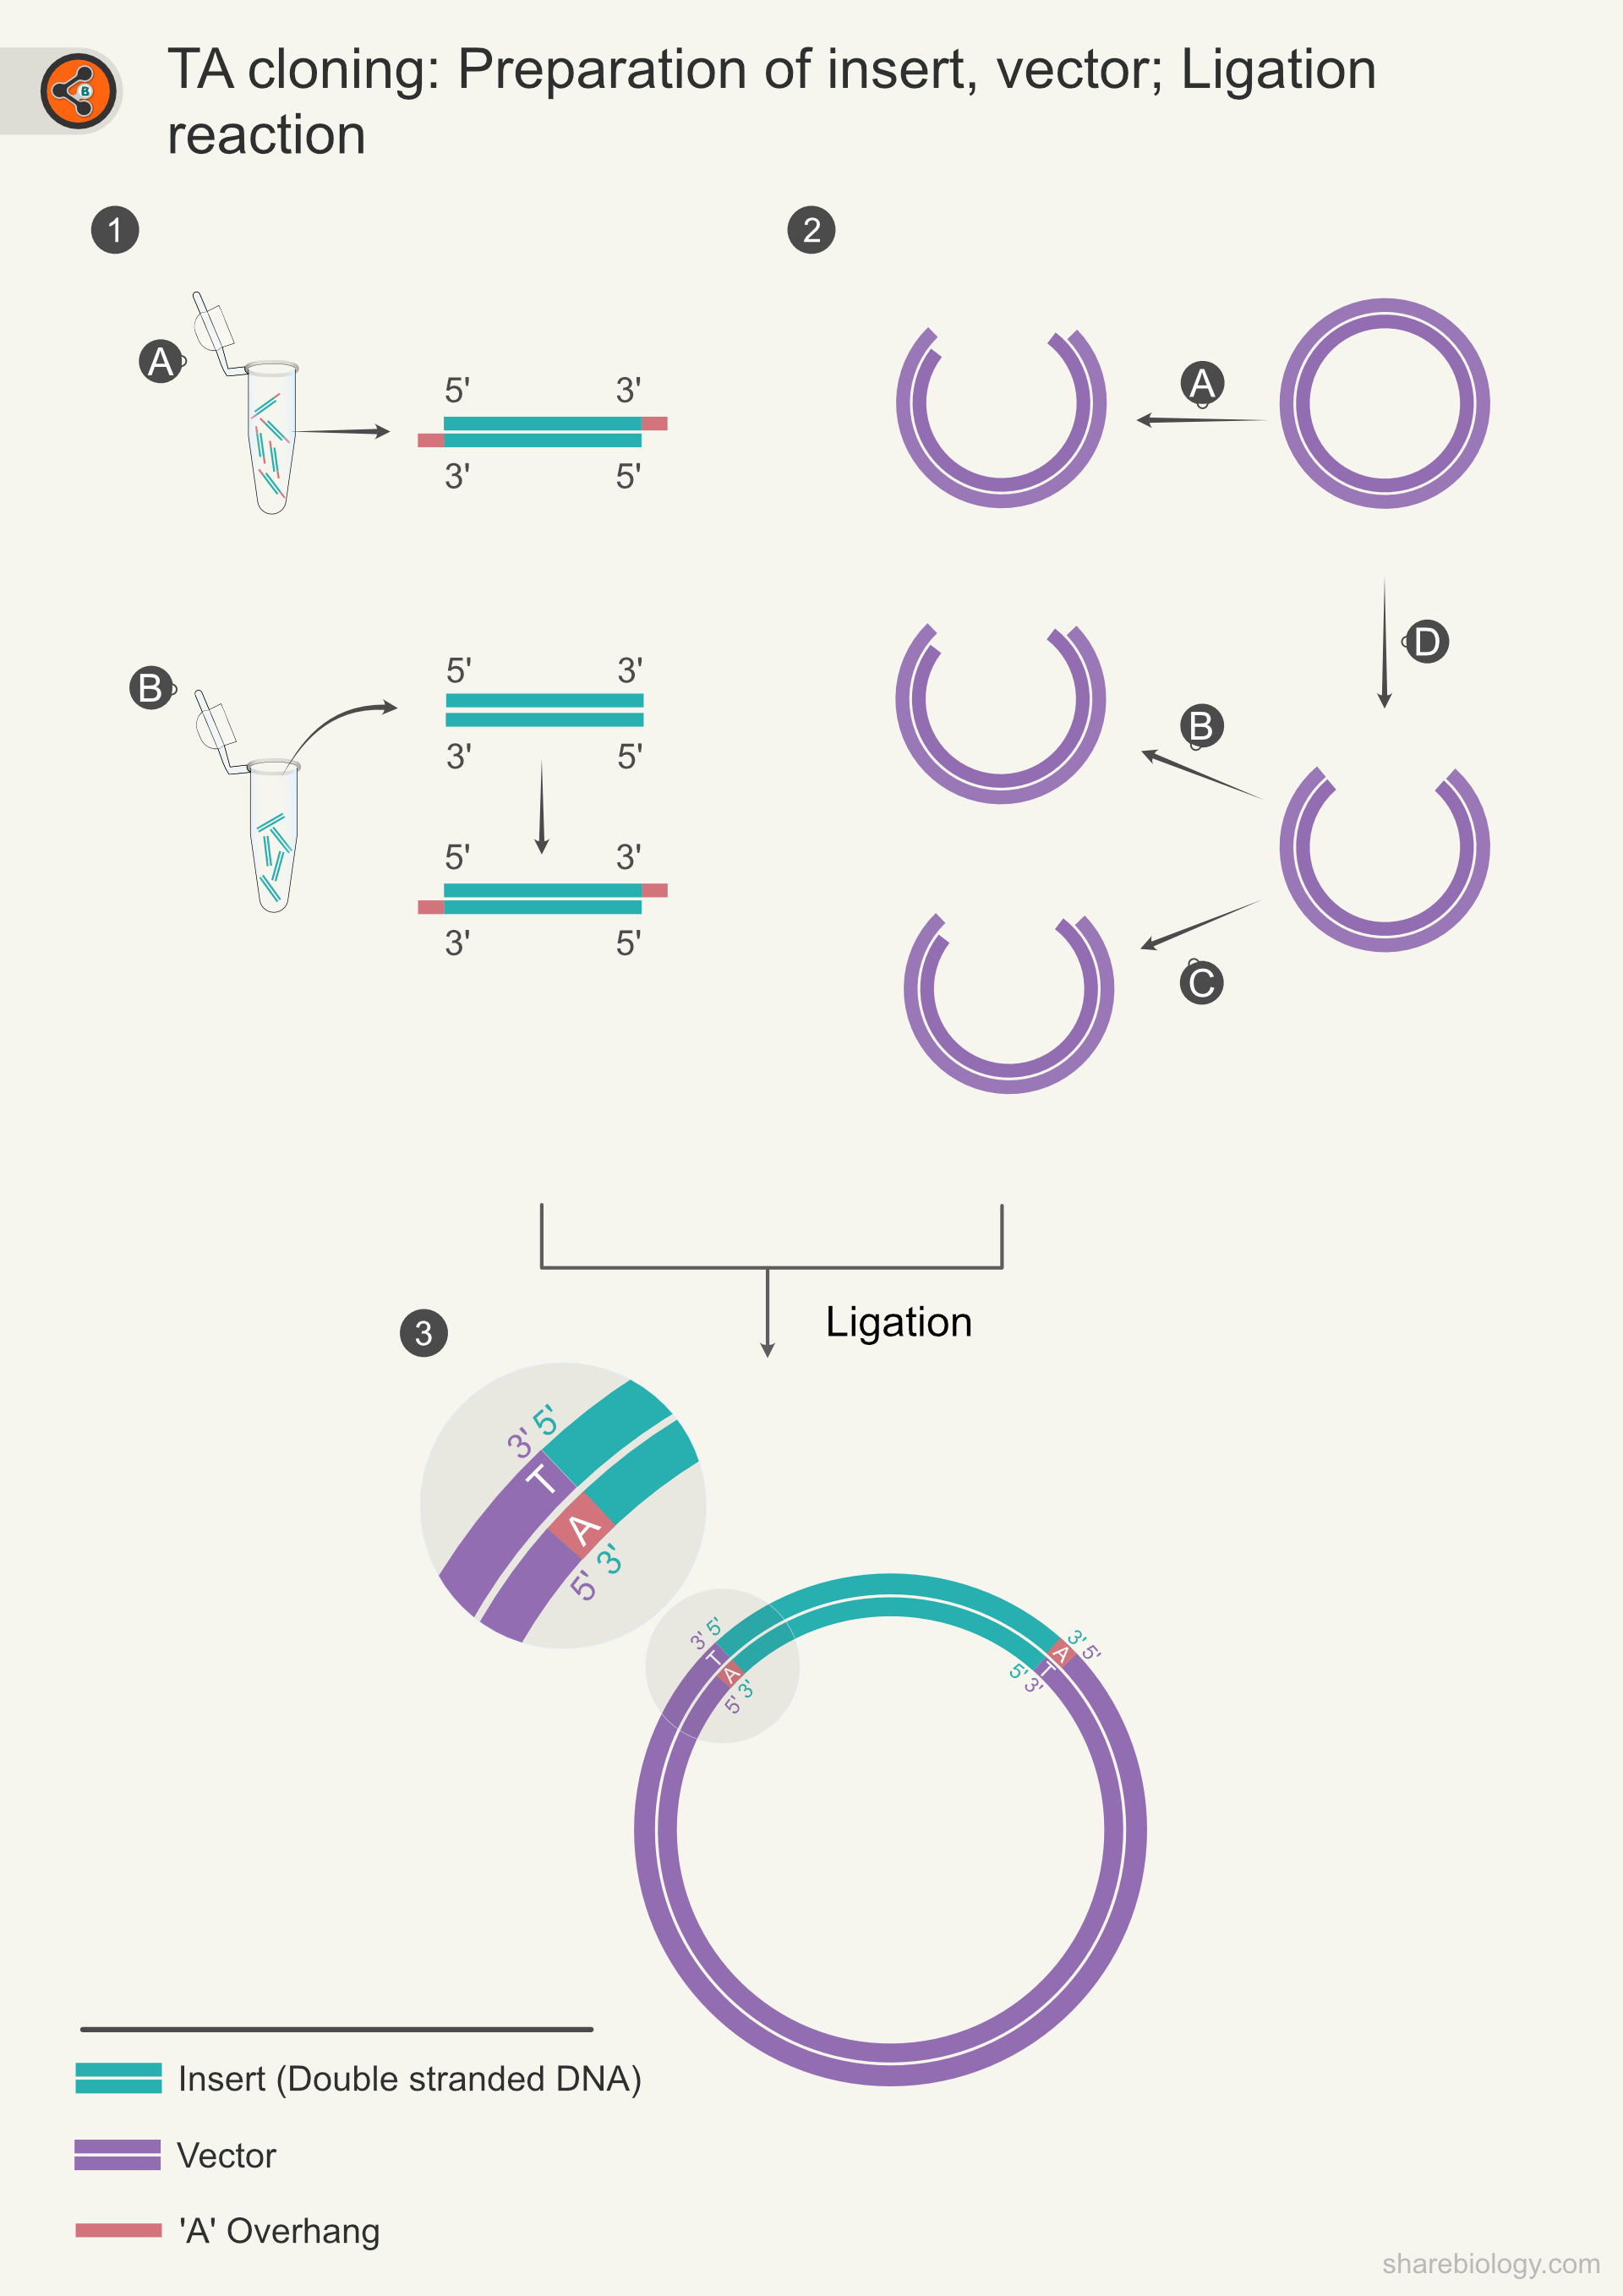 Illustration of various steps in TA cloning